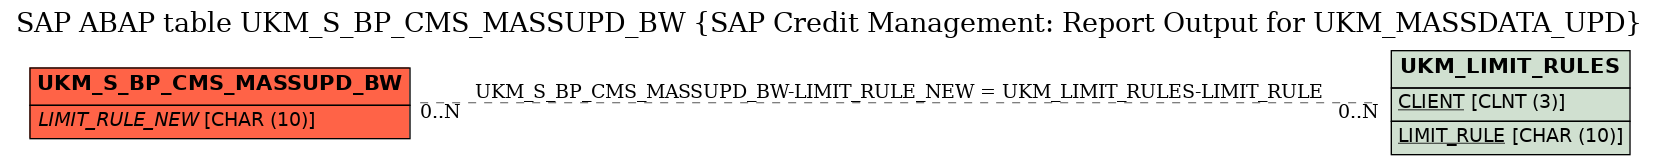 E-R Diagram for table UKM_S_BP_CMS_MASSUPD_BW (SAP Credit Management: Report Output for UKM_MASSDATA_UPD)